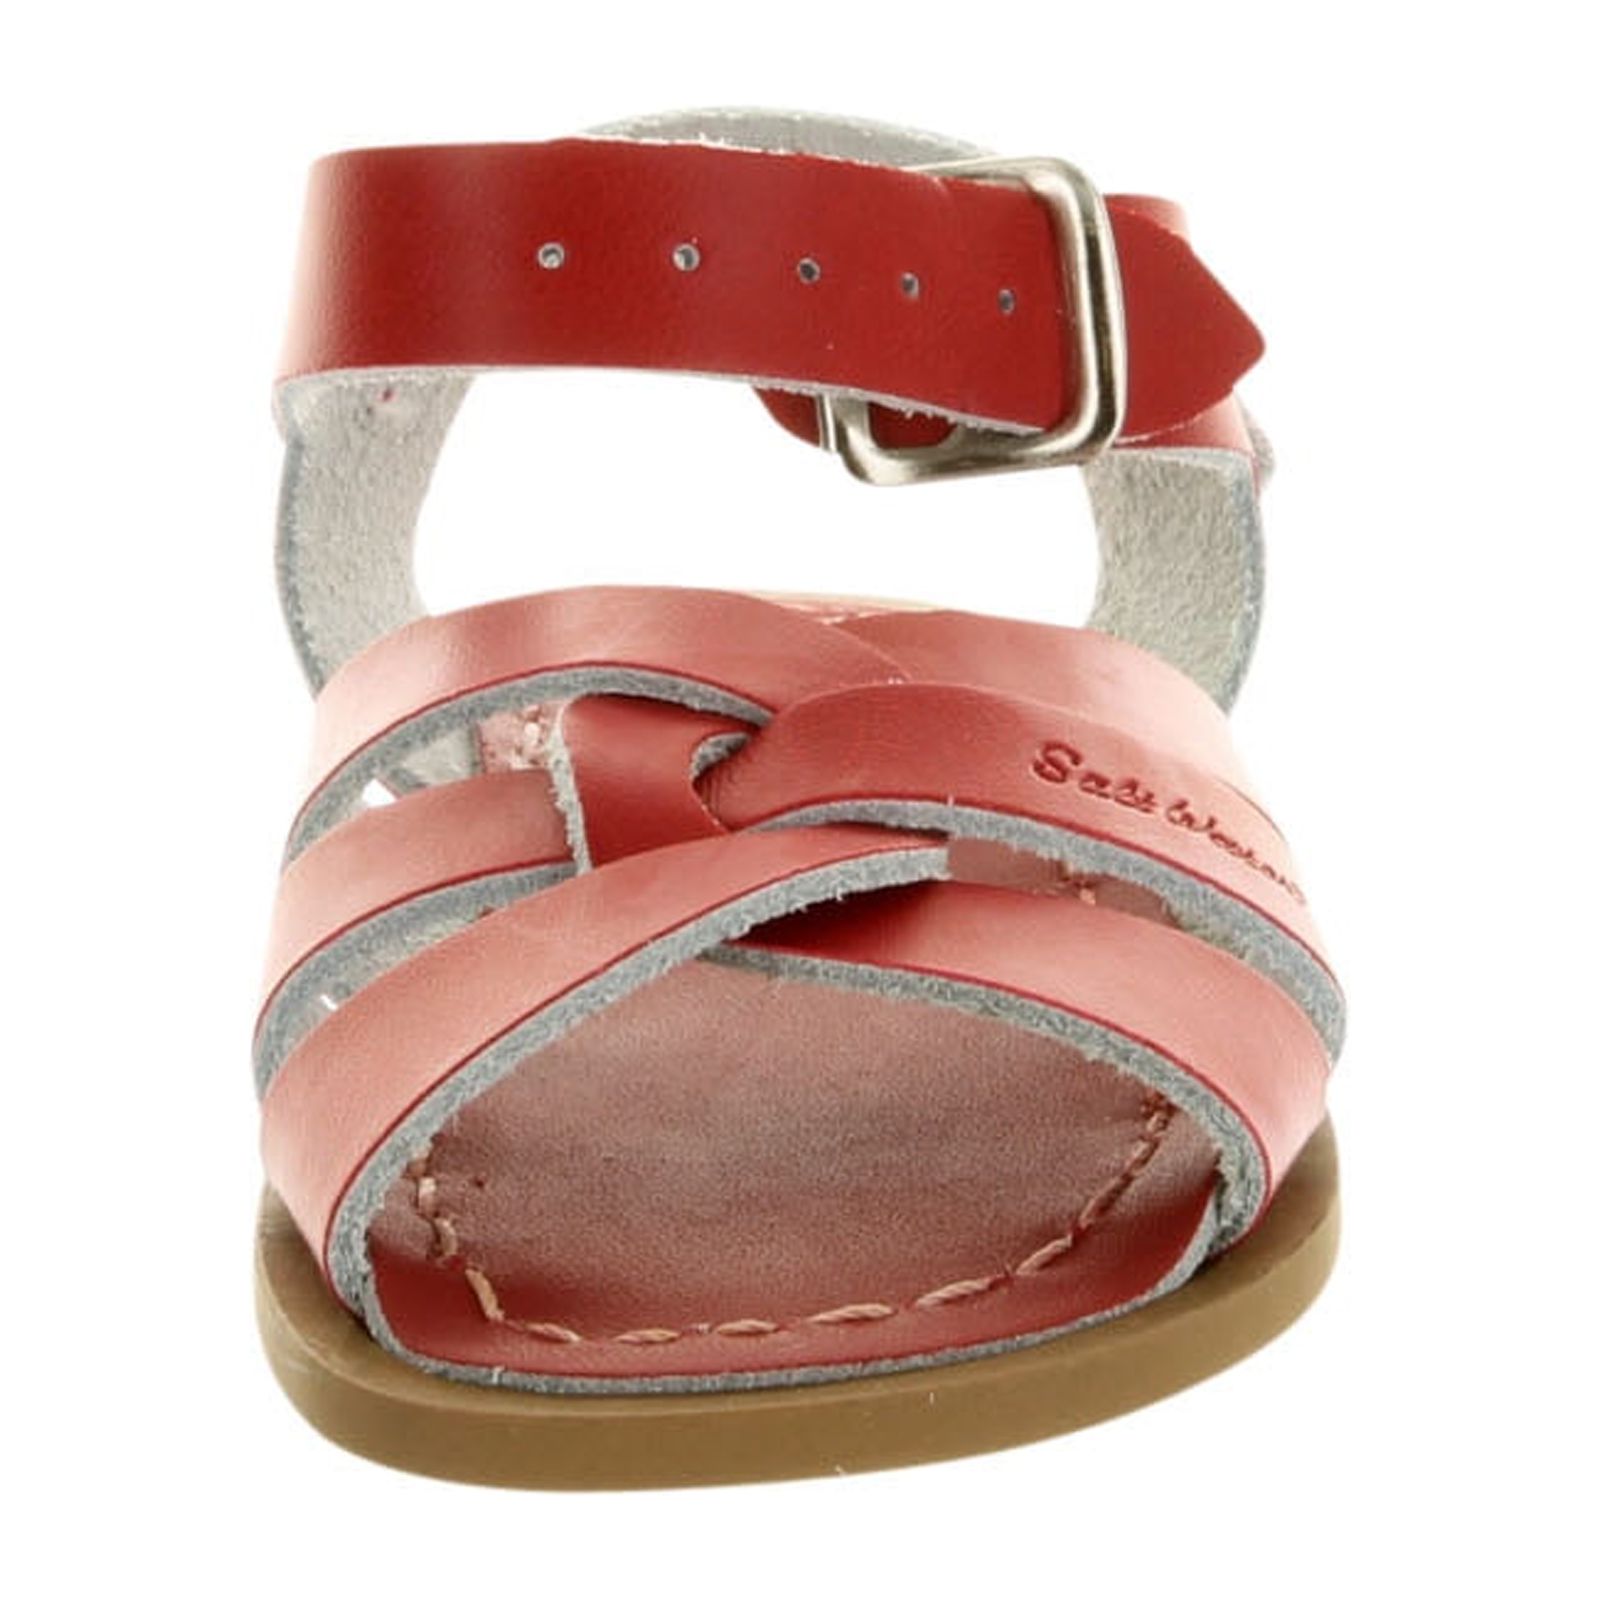 Salt Water Sandals by Hoy Shoe Original Sandal - Red - Little Kid 12 - 884-RED-12 - image 3 of 4